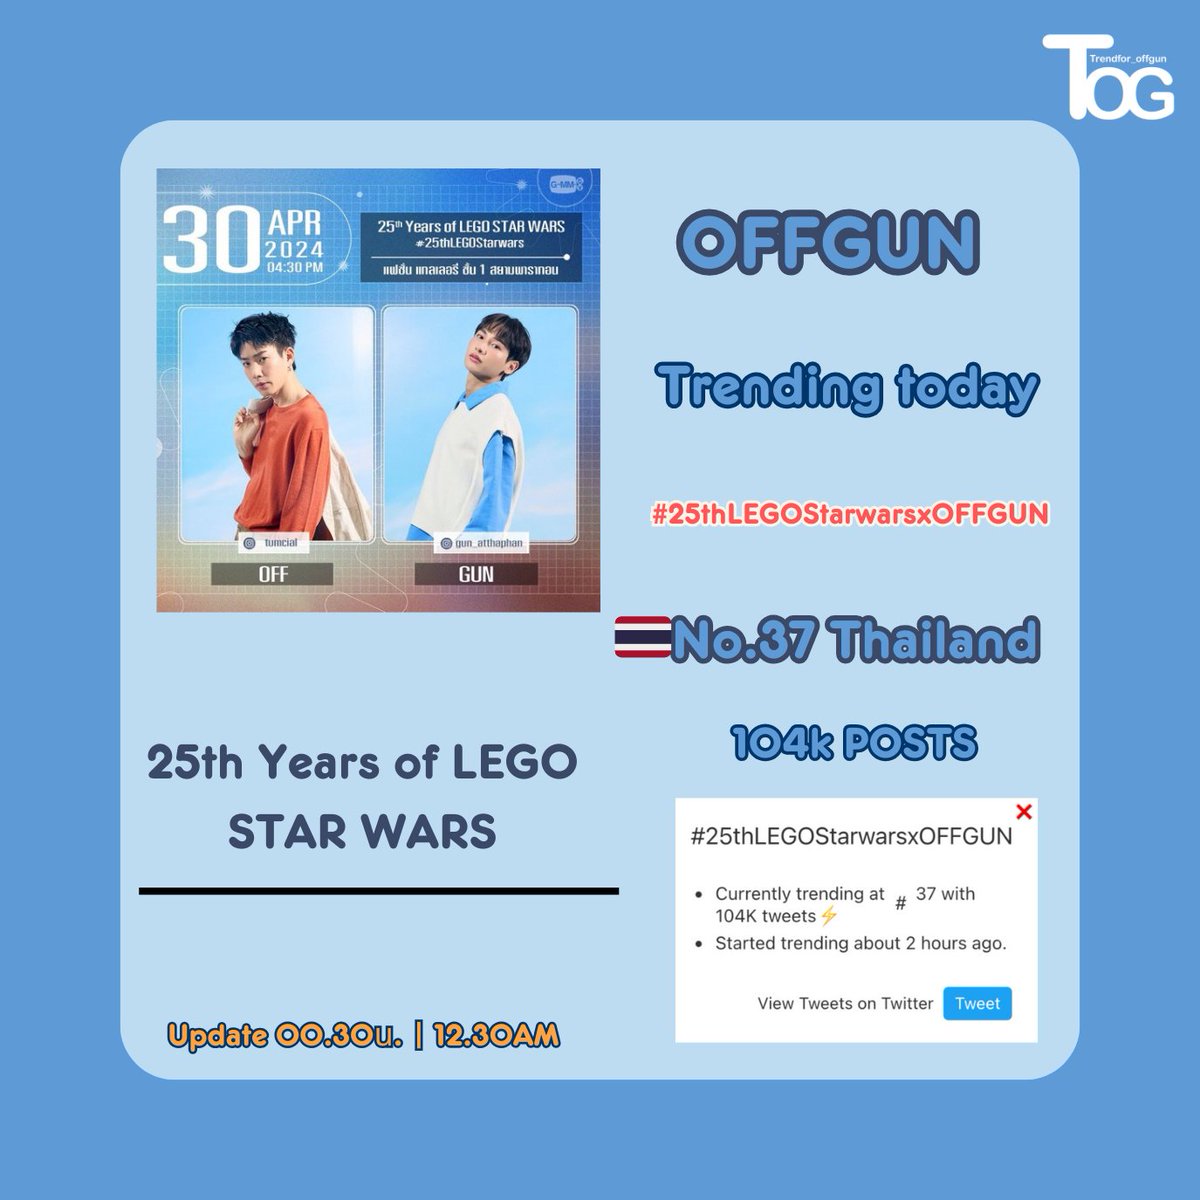 𝗢𝗙𝗙𝗚𝗨𝗡 Trending today

— 25th Years of LEGO STAR WARS

⏰ 00.30น.  |  12.30AM(TH)
🇹🇭No. 37  Thailand  Trended

—  104k  POSTS

— ขอบคุณเบบี๋ทุกคนมากๆนะคะที่ช่วยปั่นเทรนด์ น้องขึ้นเทรนด์ดึกมากๆยอดทวิตสูงมาก🫶🏻💚

#25thLEGOStarwarsxOFFGUN 
#TRENDTWITTEROFFGUN
#ออฟกัน #OffGun